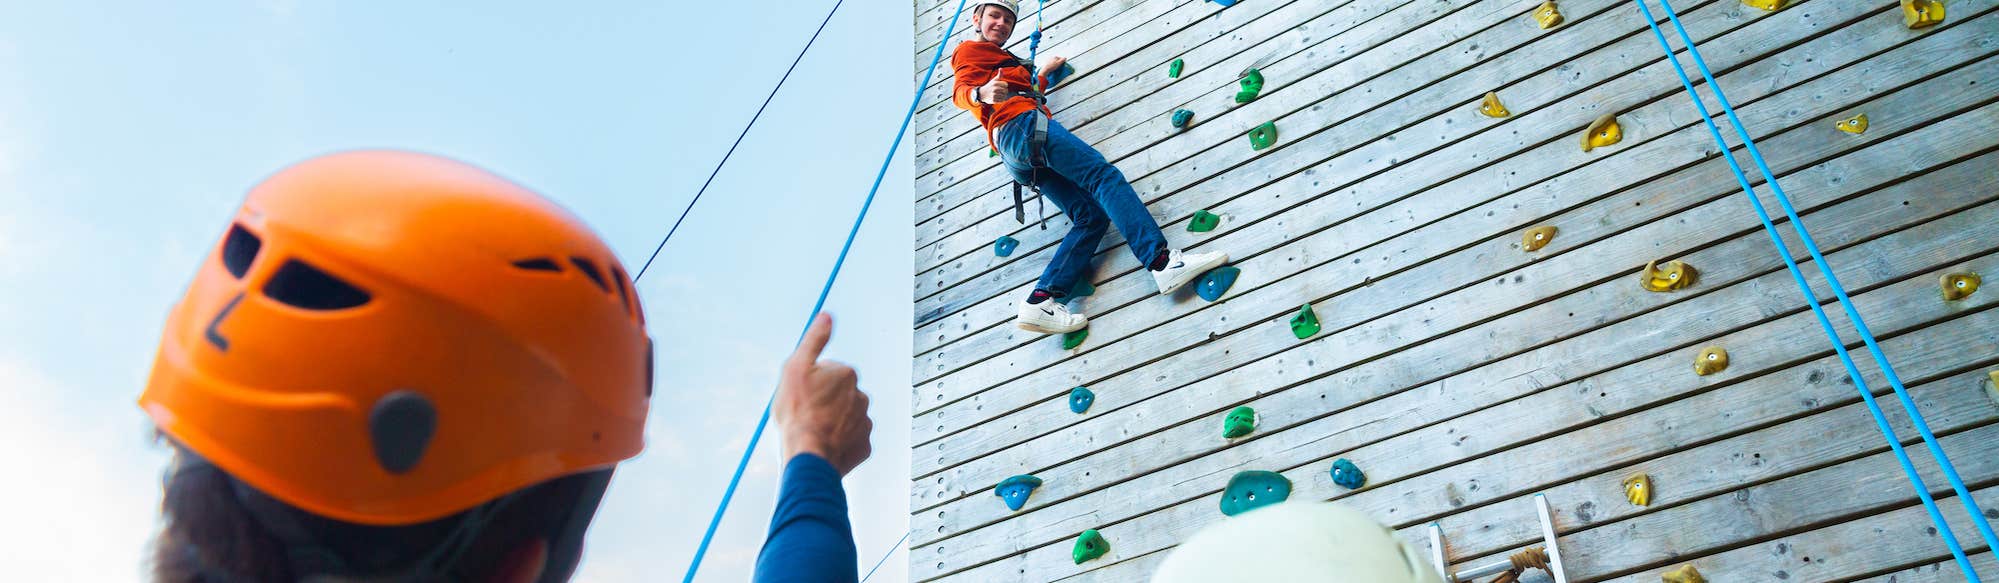 A boy wall climbing at UL Sport Adventure Centre in Killaloe, County Clare